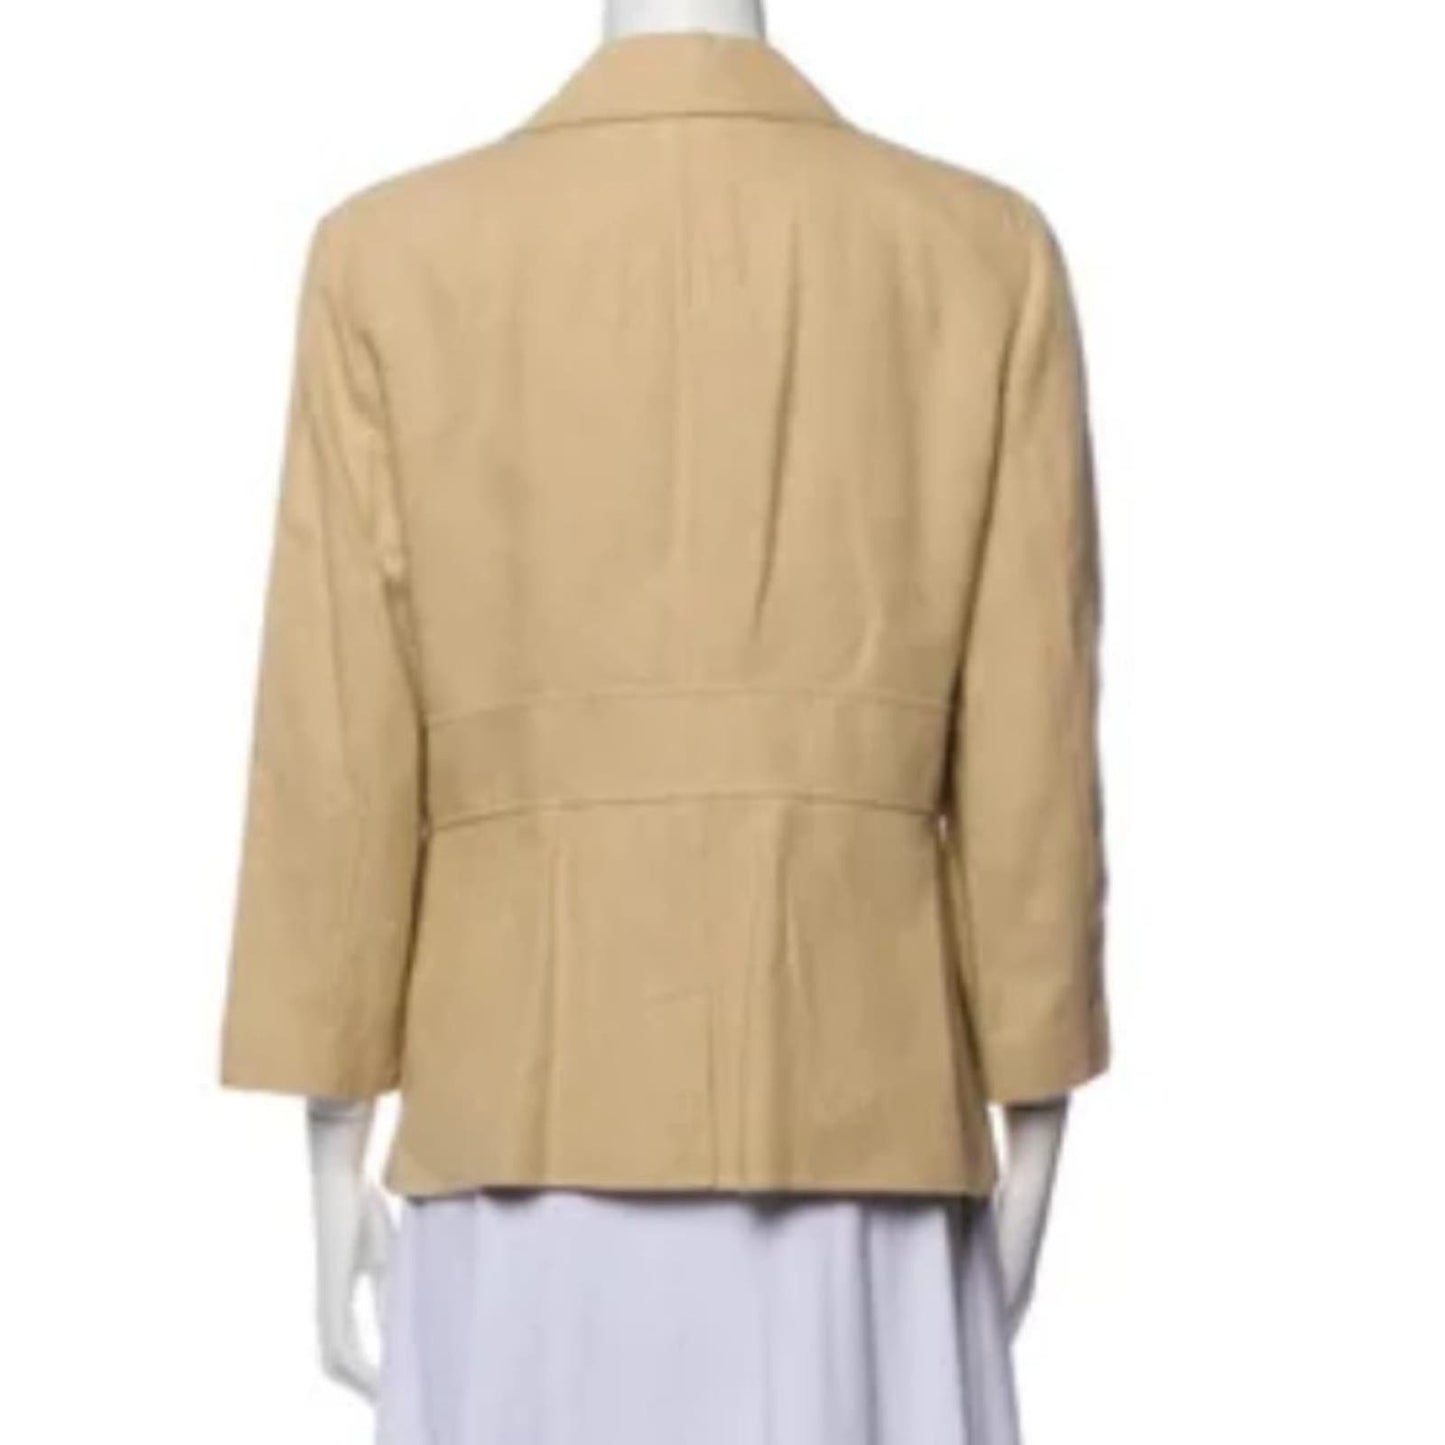 Tory Burch Large Button Classic Jacket in Tan Khaki Size 10